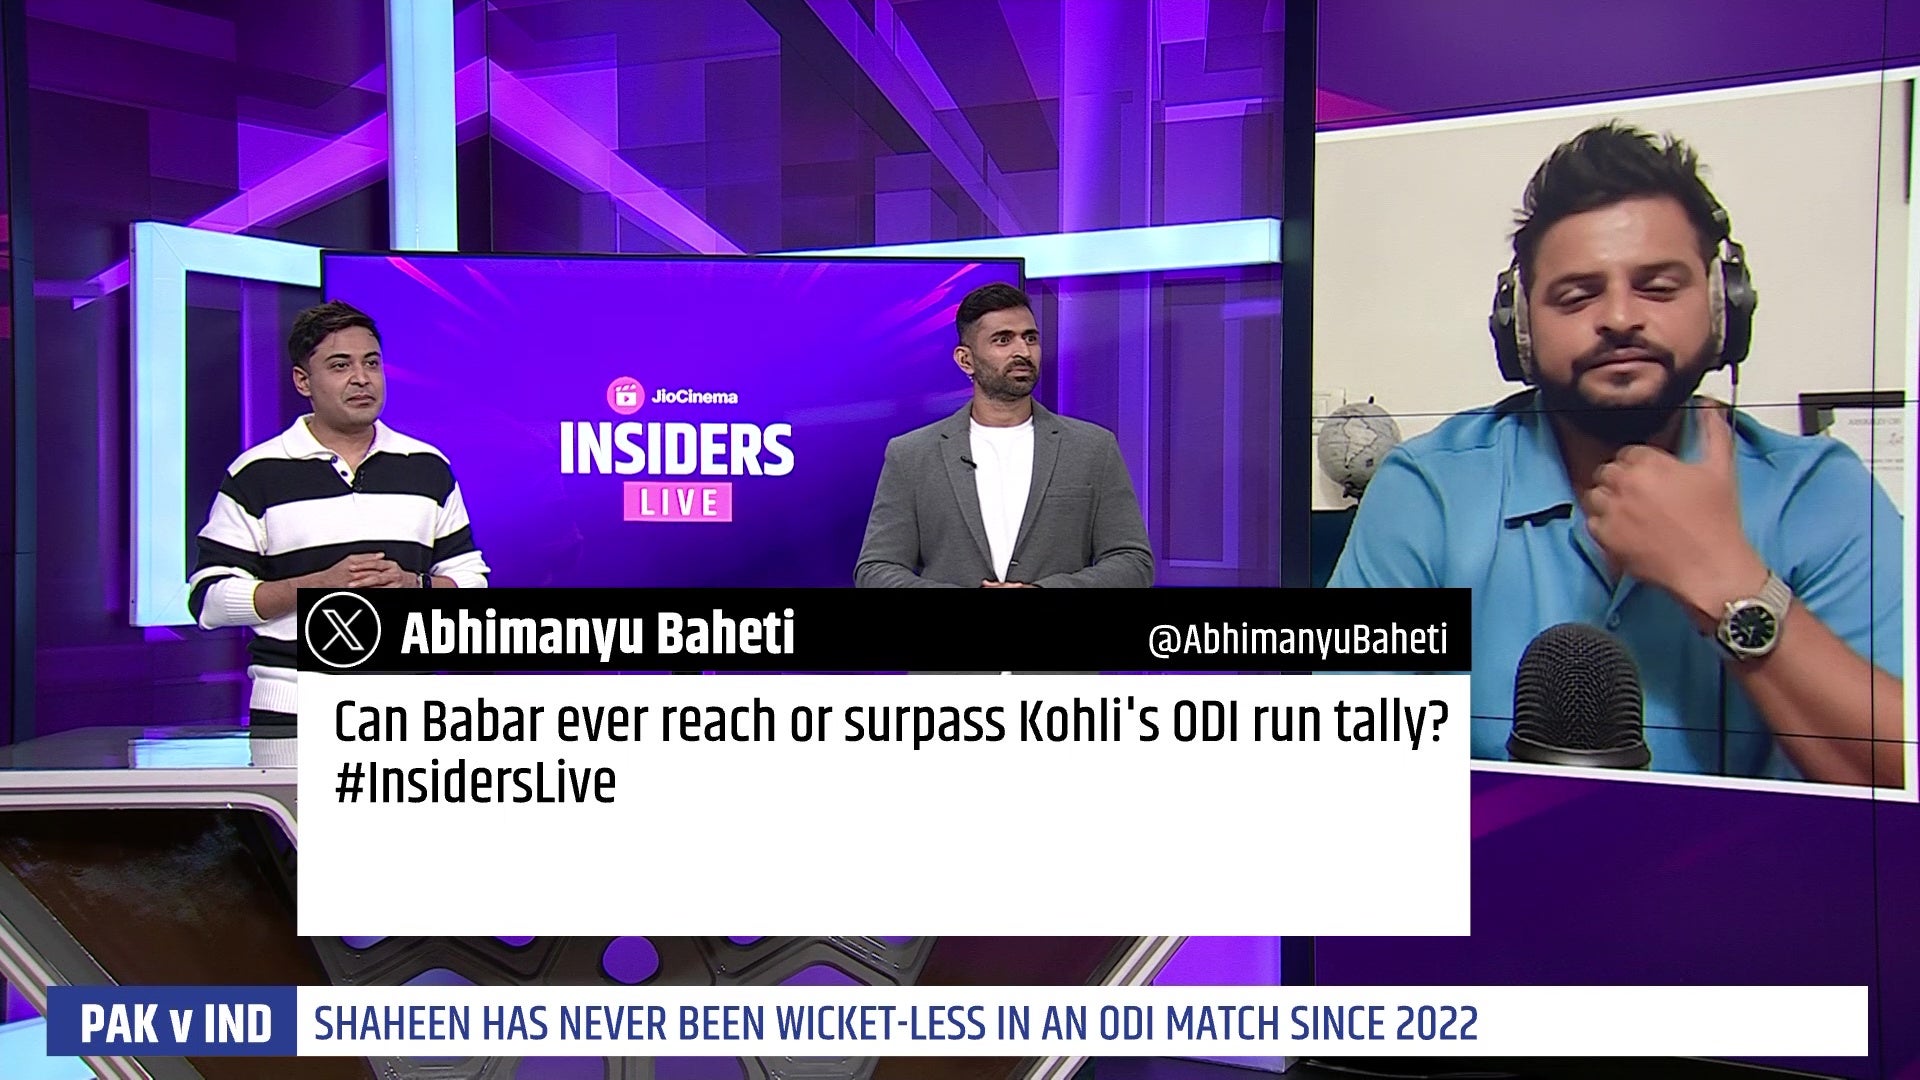 Watch Will Babar Surpass Kohli In ODI Runs? Video Online(HD) On JioCinema